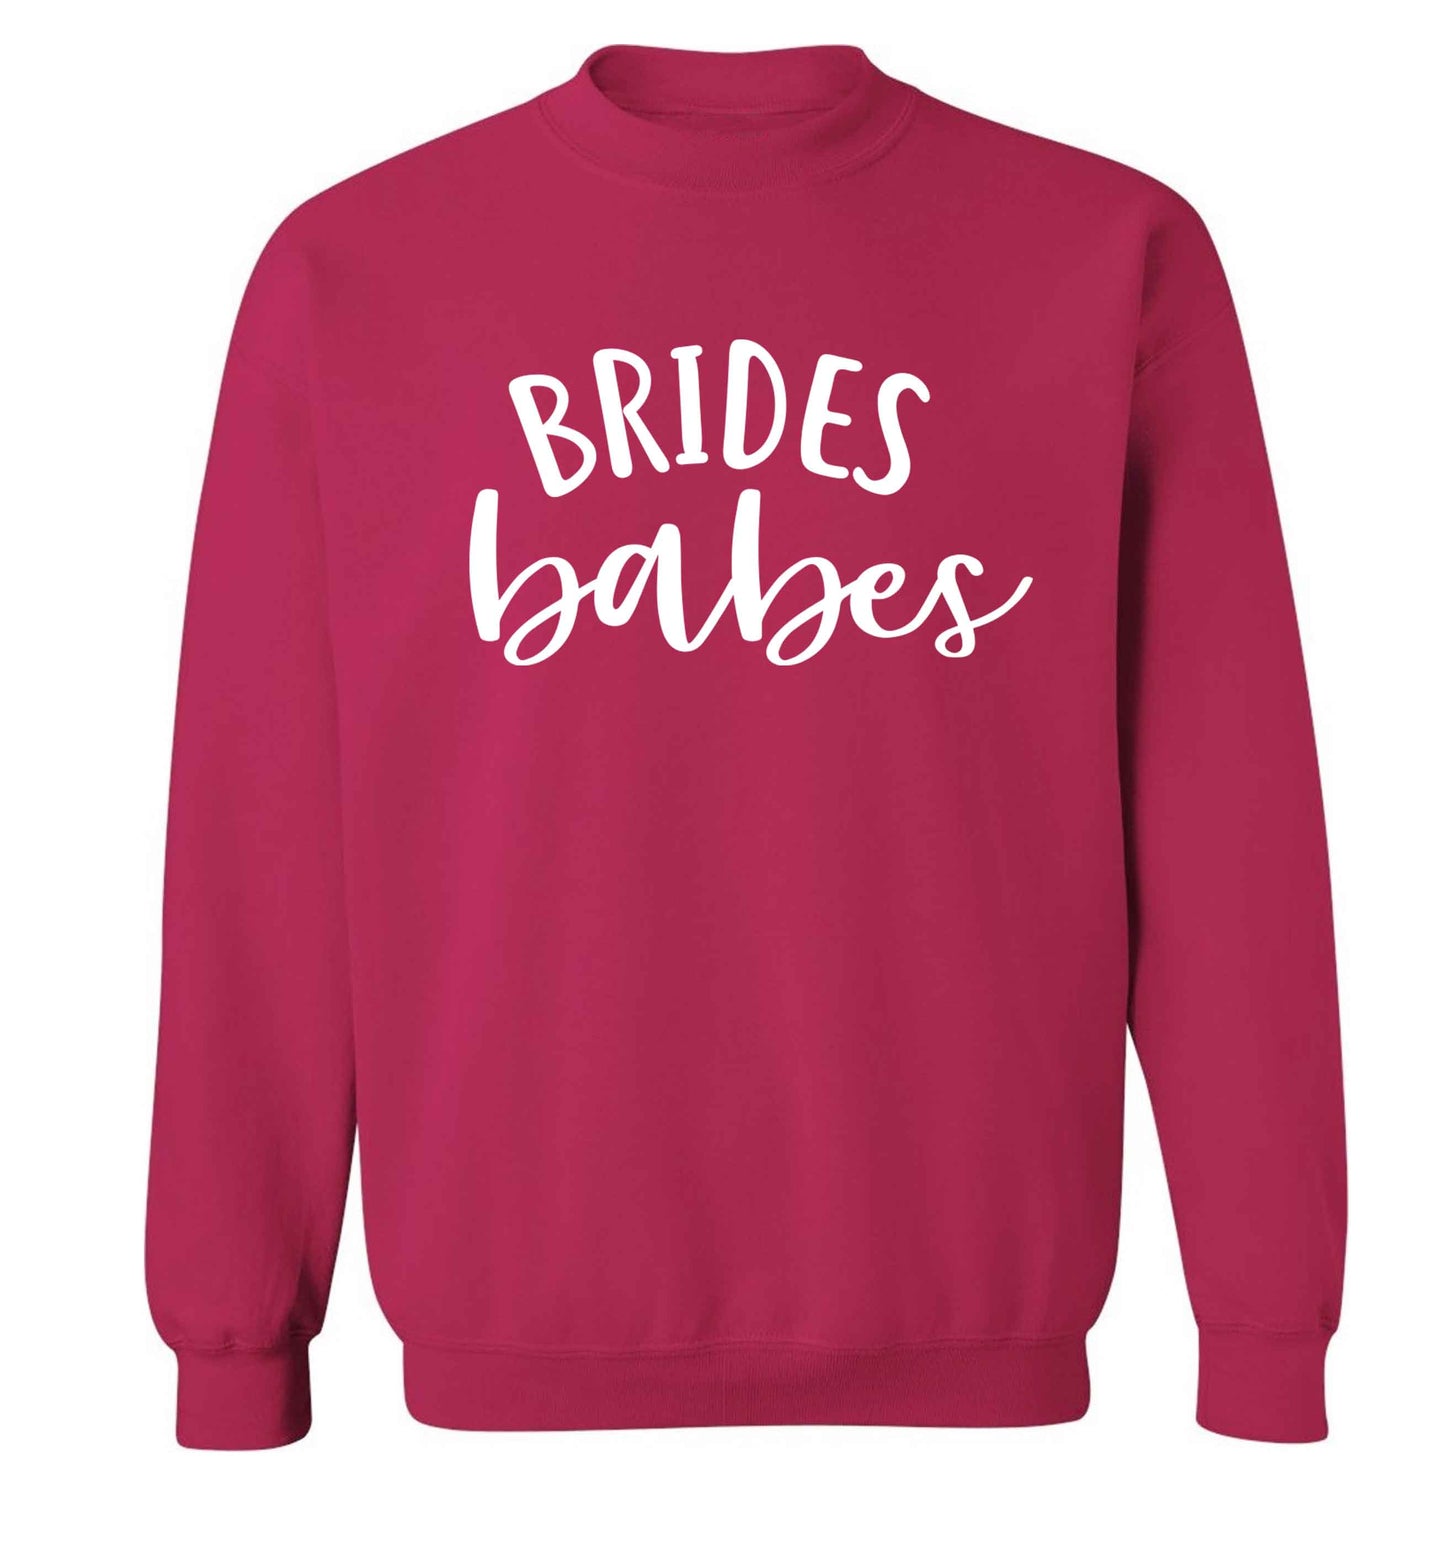 Brides Babes Adult's unisex pink Sweater 2XL